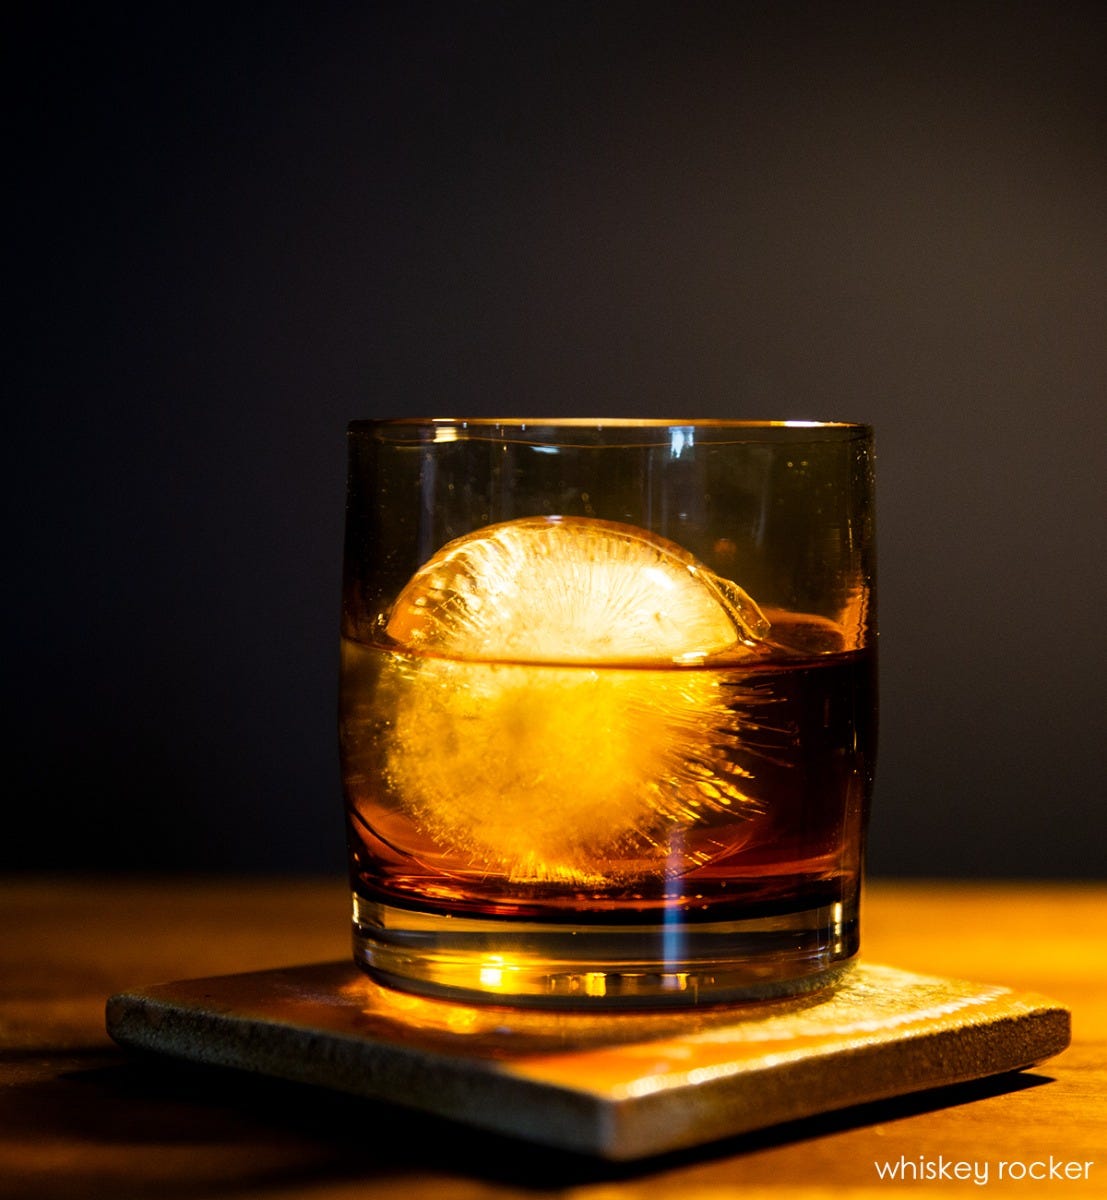 whiskey rocker, amber translucent, hand-blown glass lowball drinking glass.